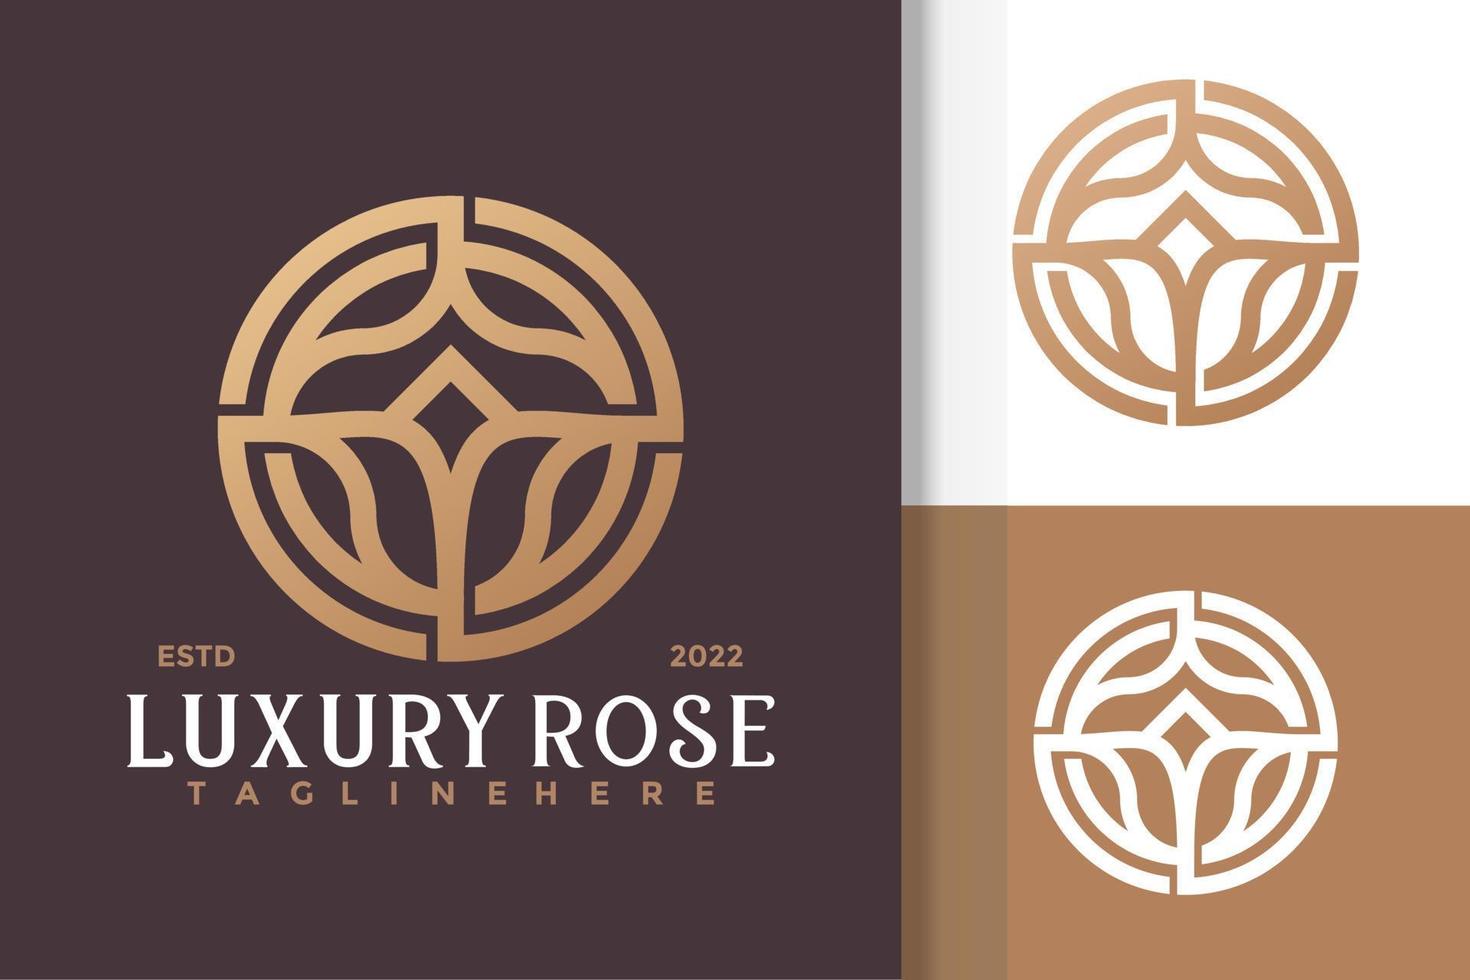 lyxig elegant ros blomma logotyp design vektor mall